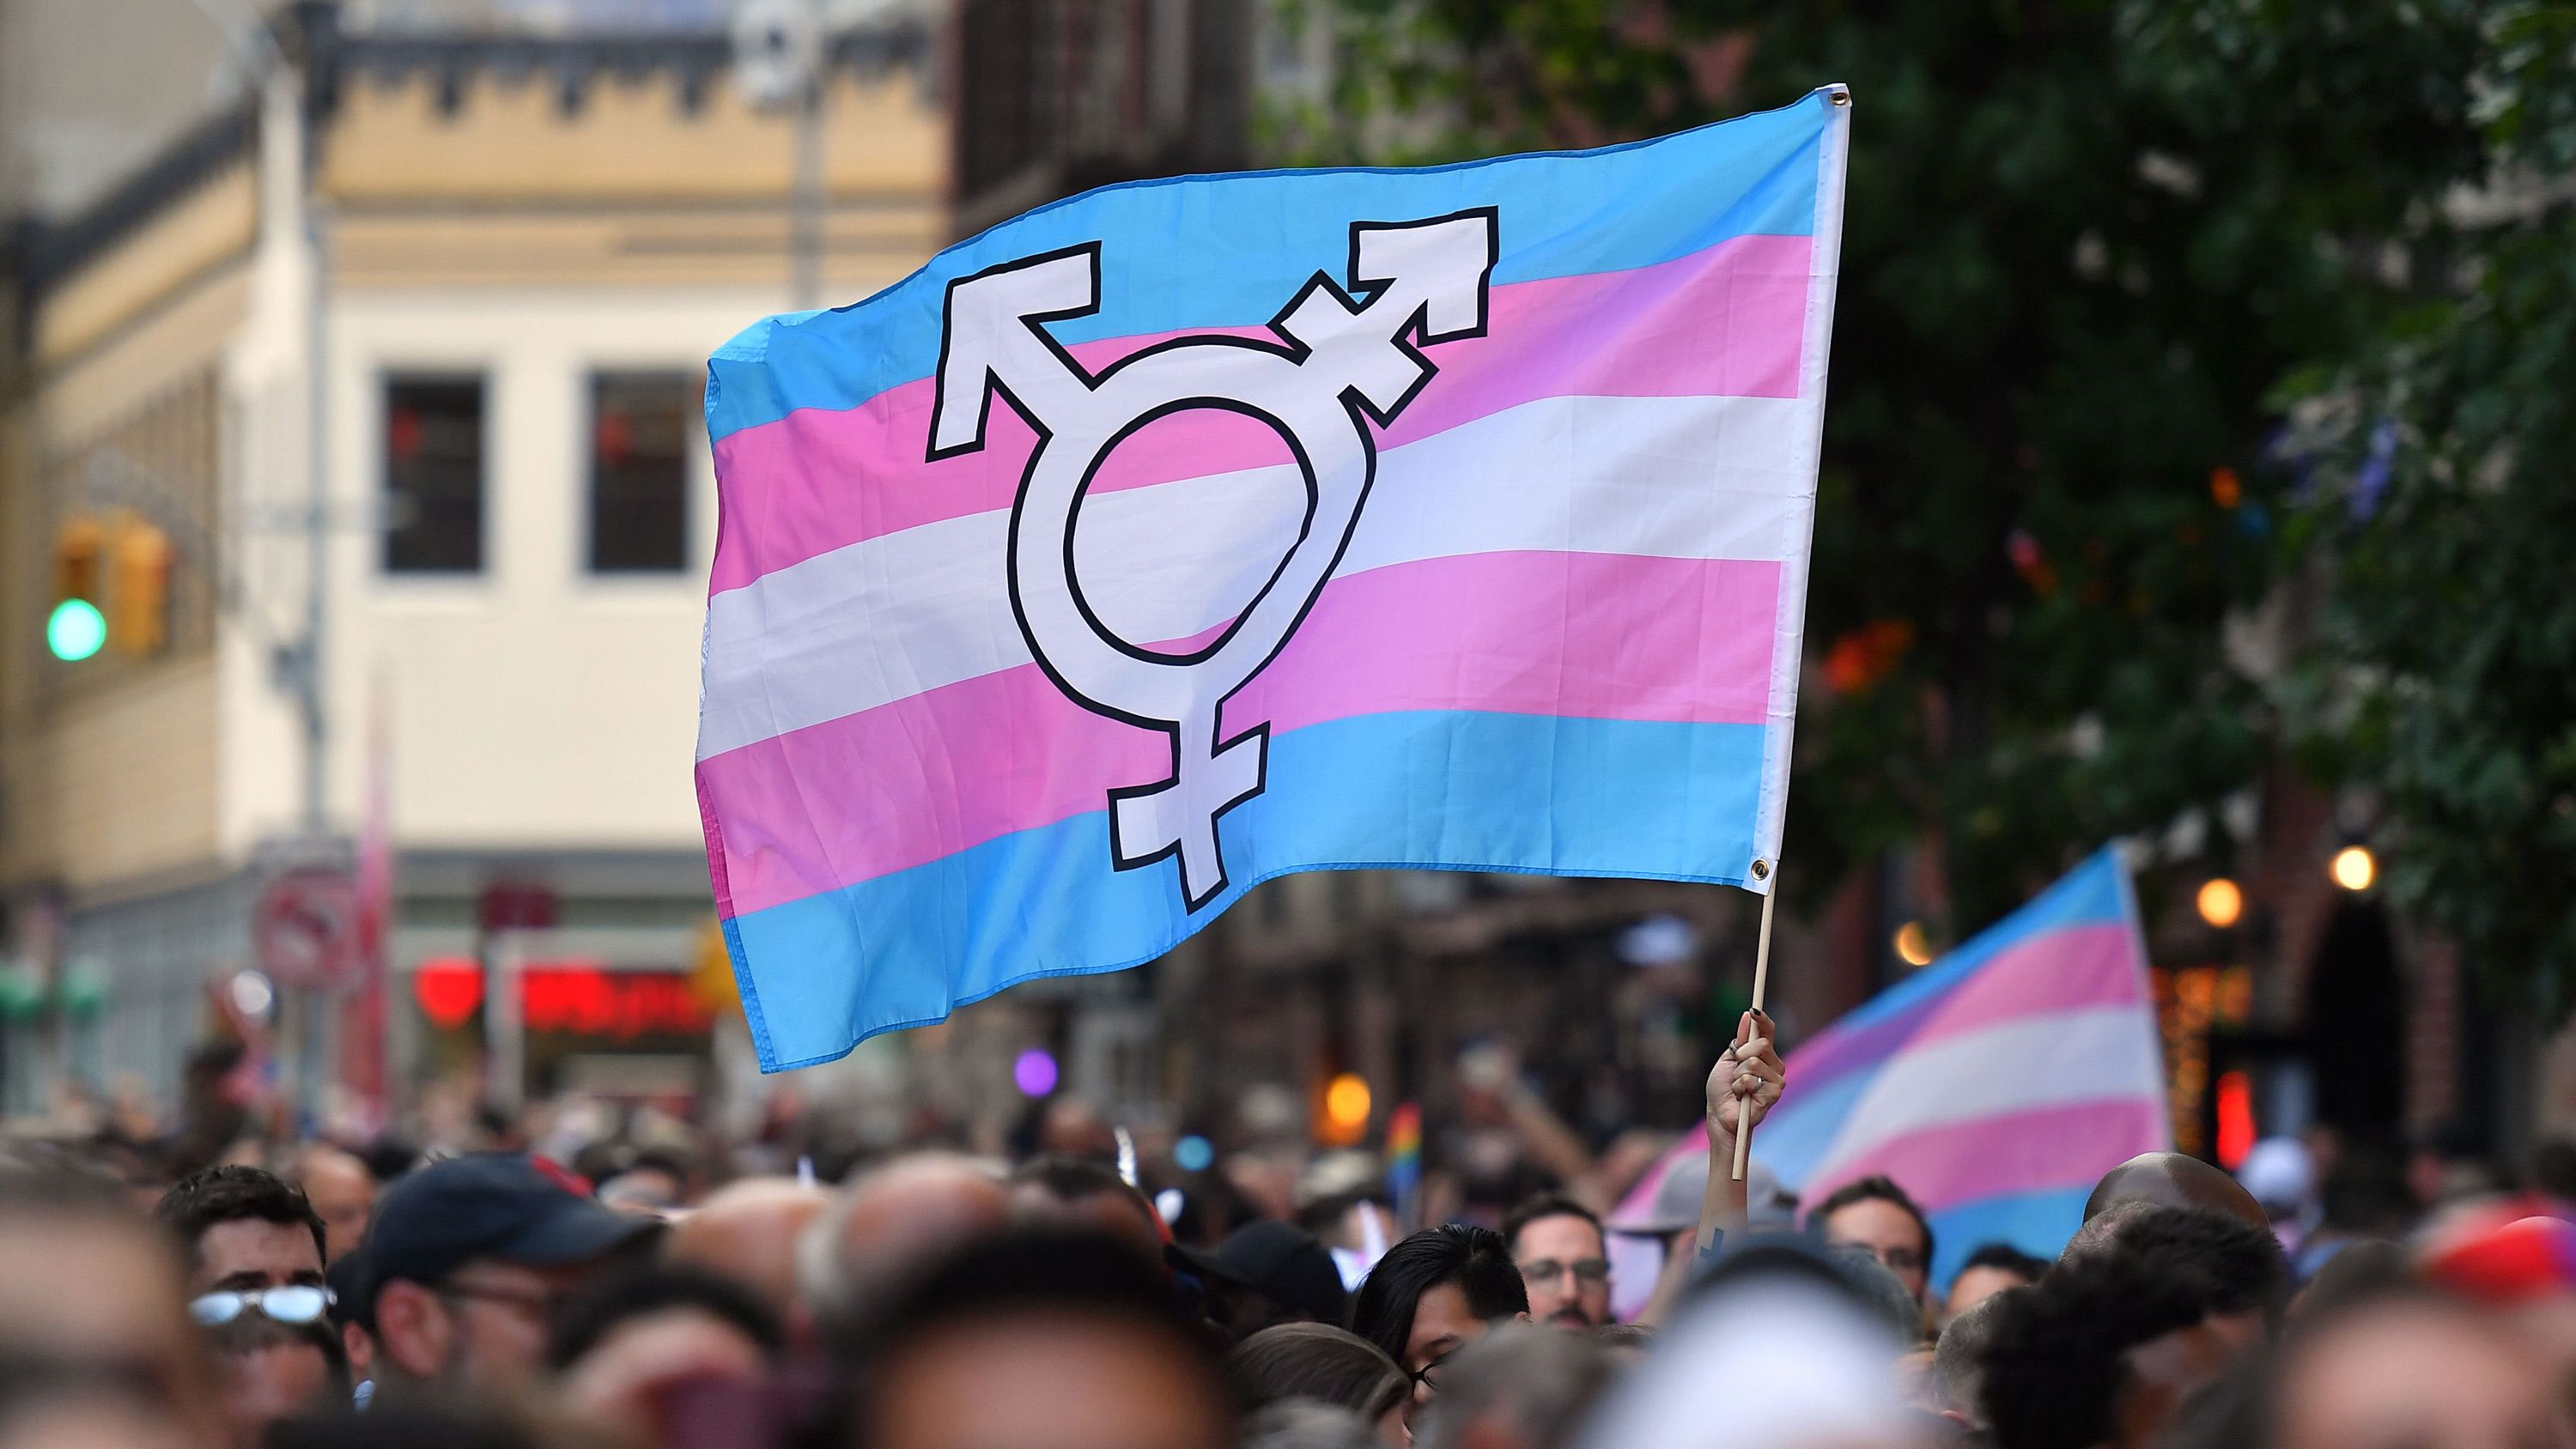 How often do transgender people regret transitioning?